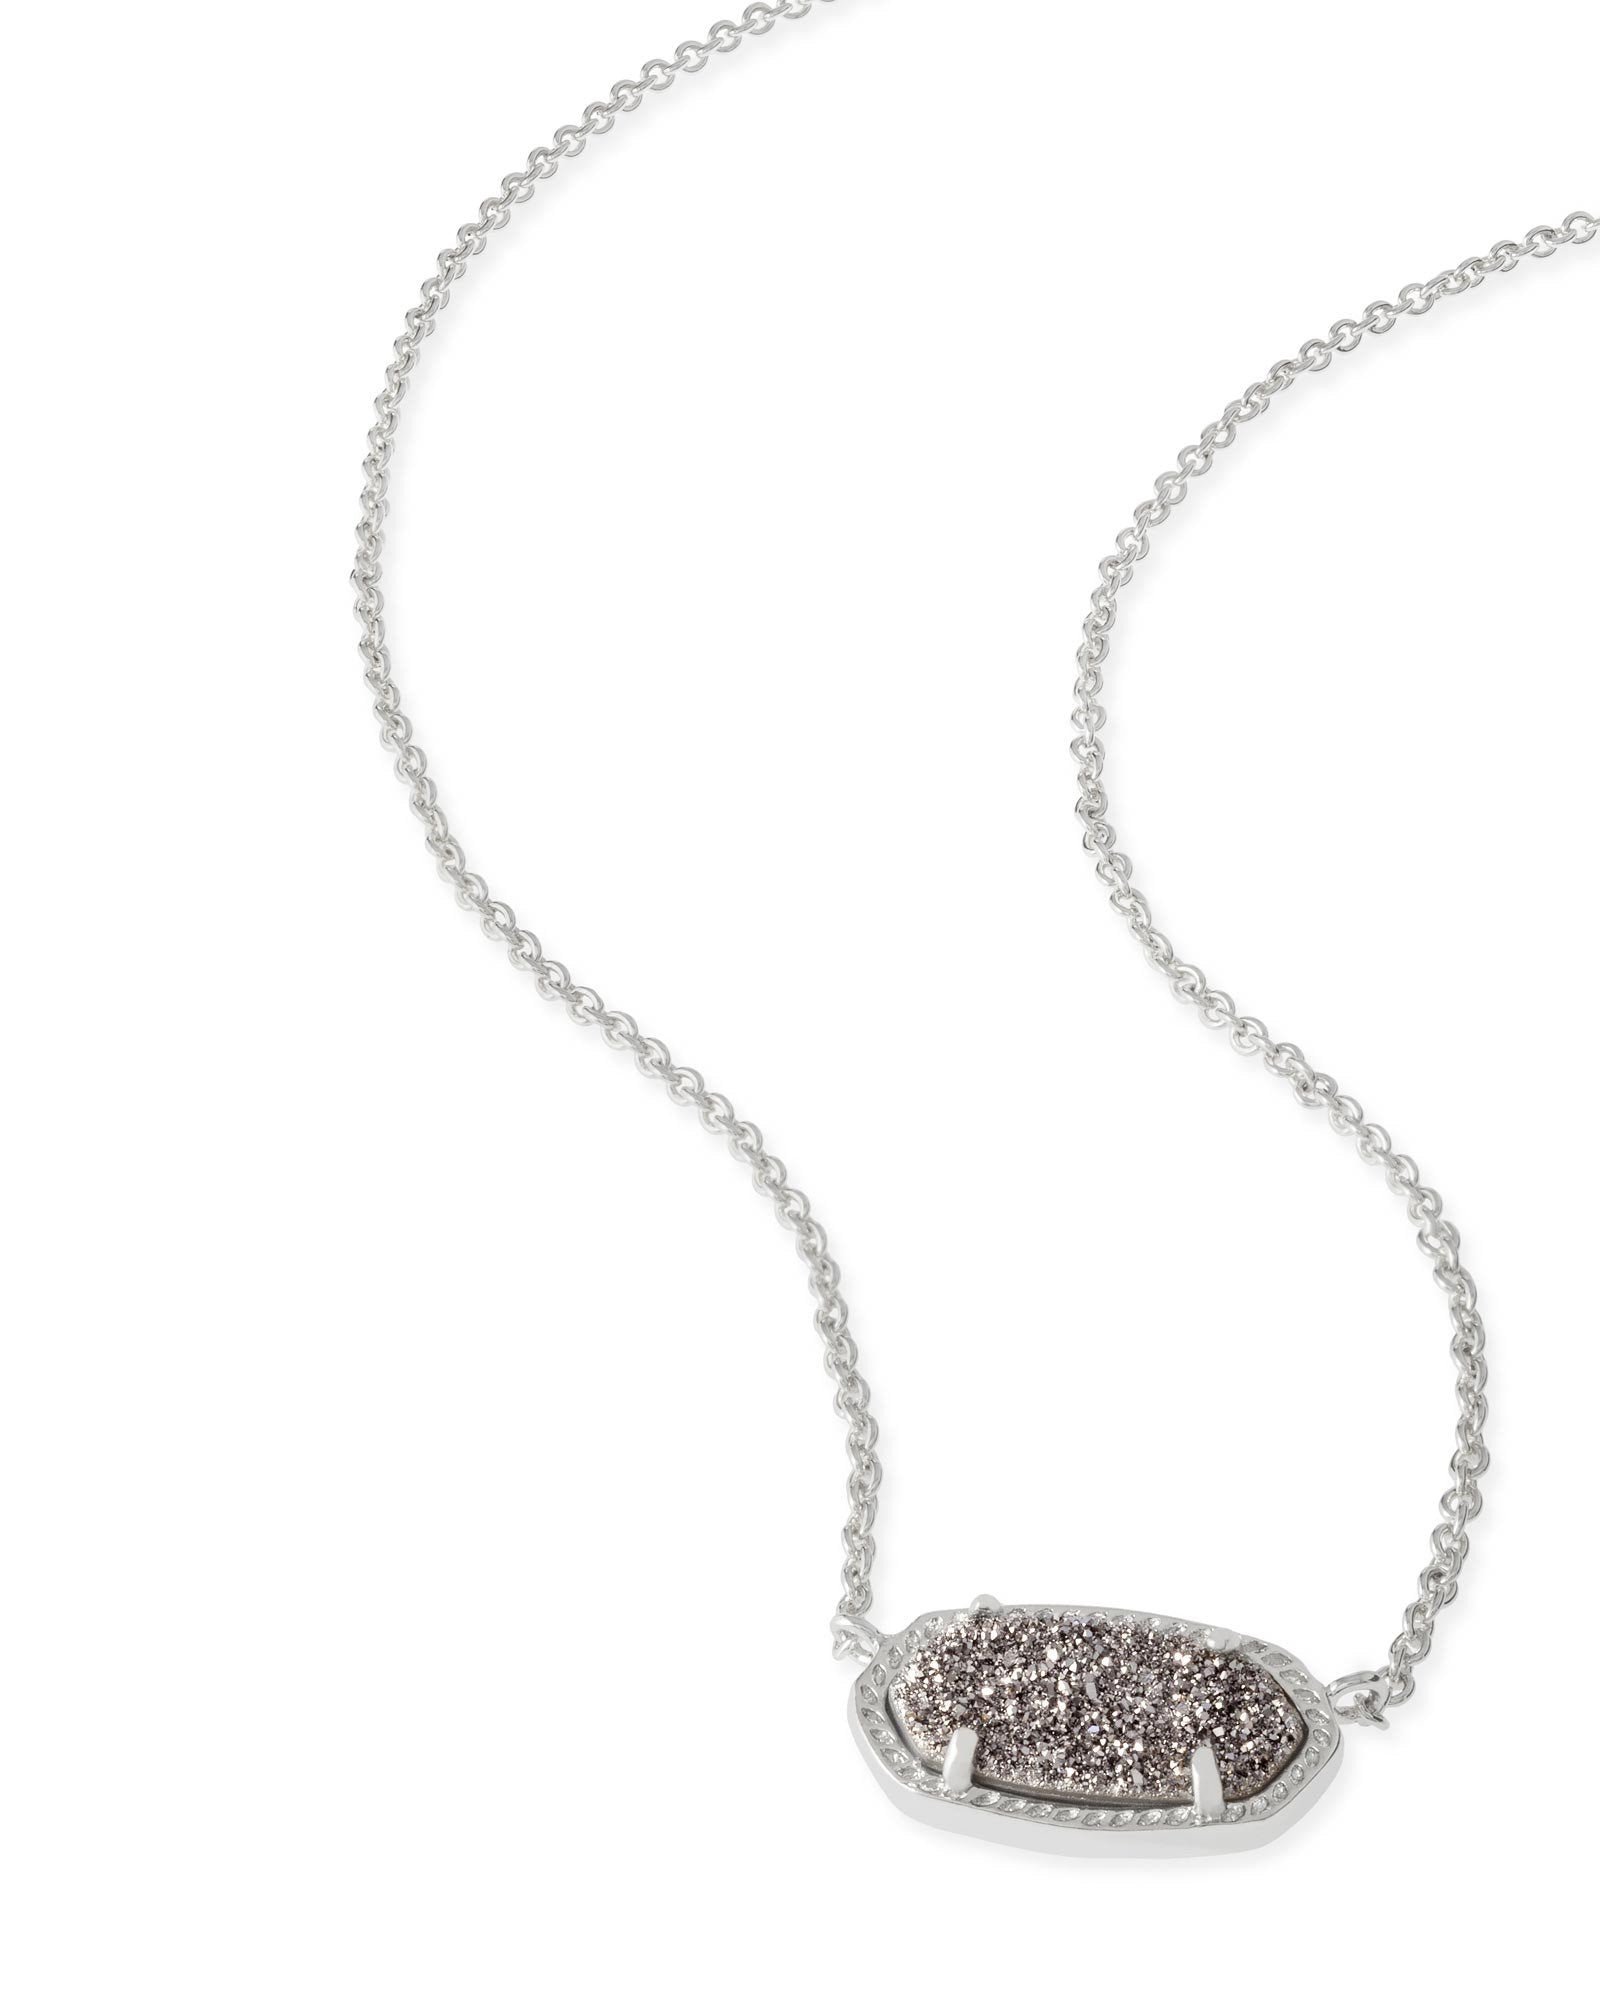 Pandora Sparkling Infinity Heart Collier Necklace: Precious Accents, Ltd.